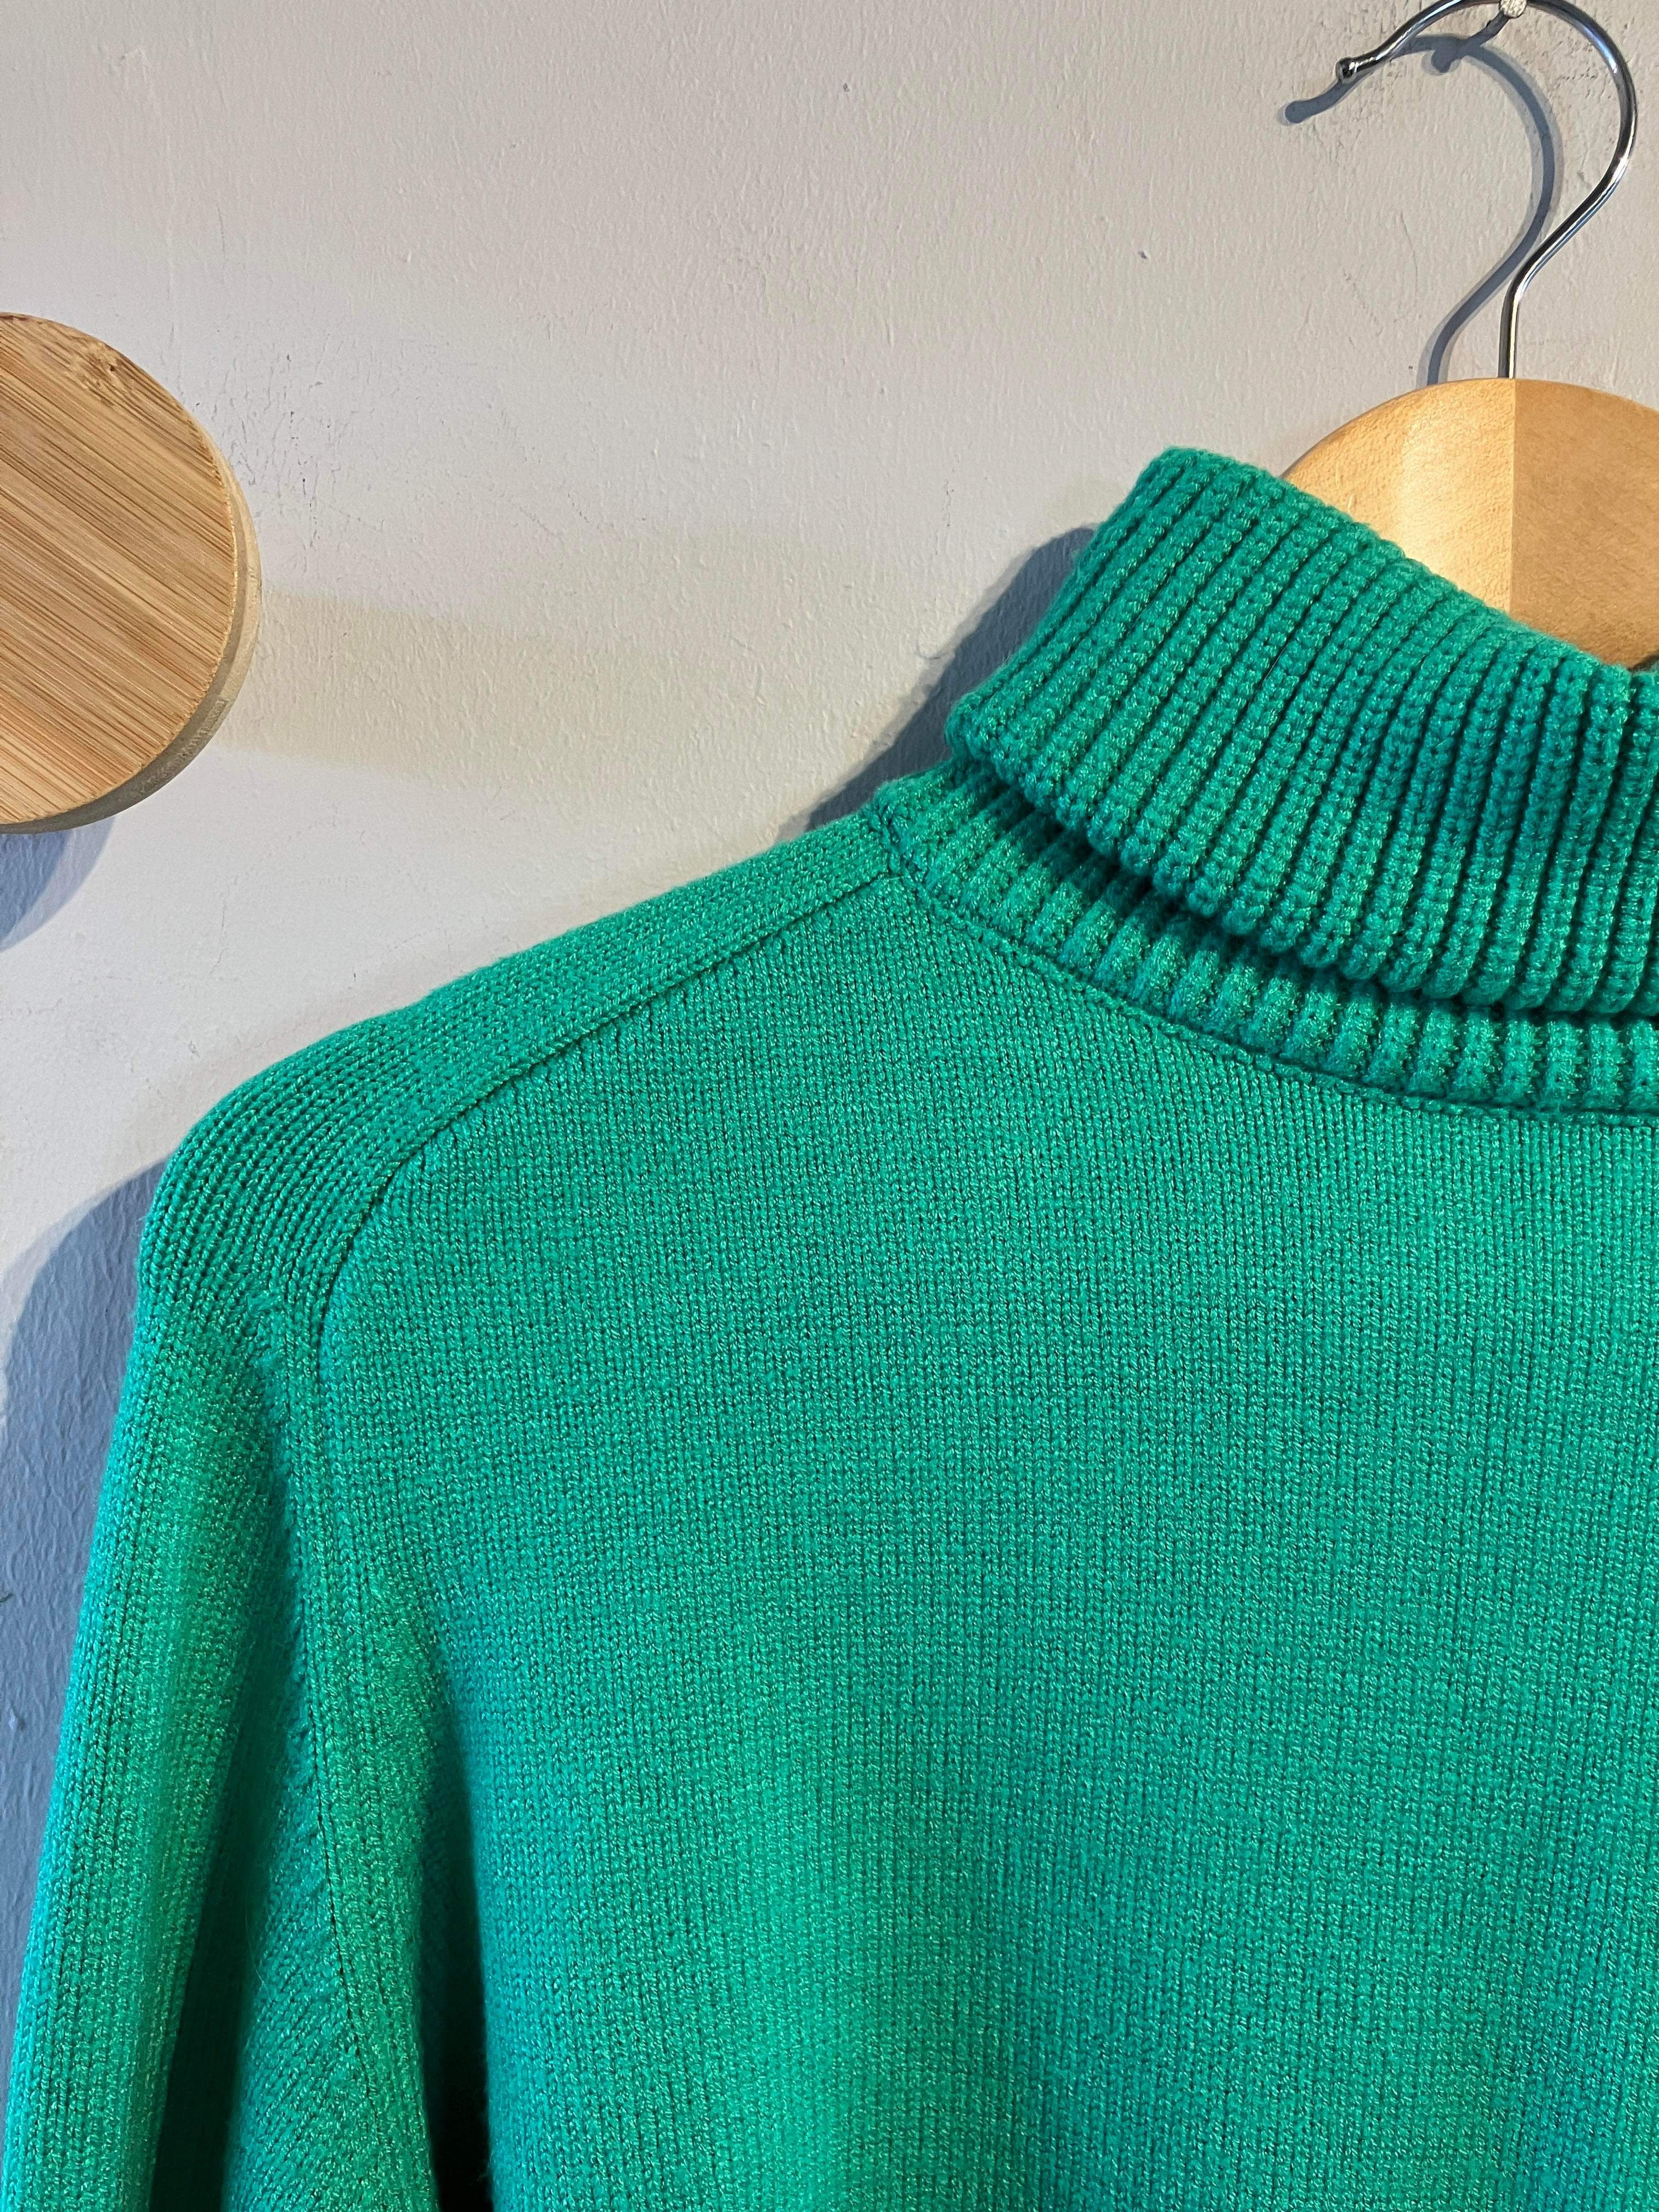 No brand - Sweater - Size: S